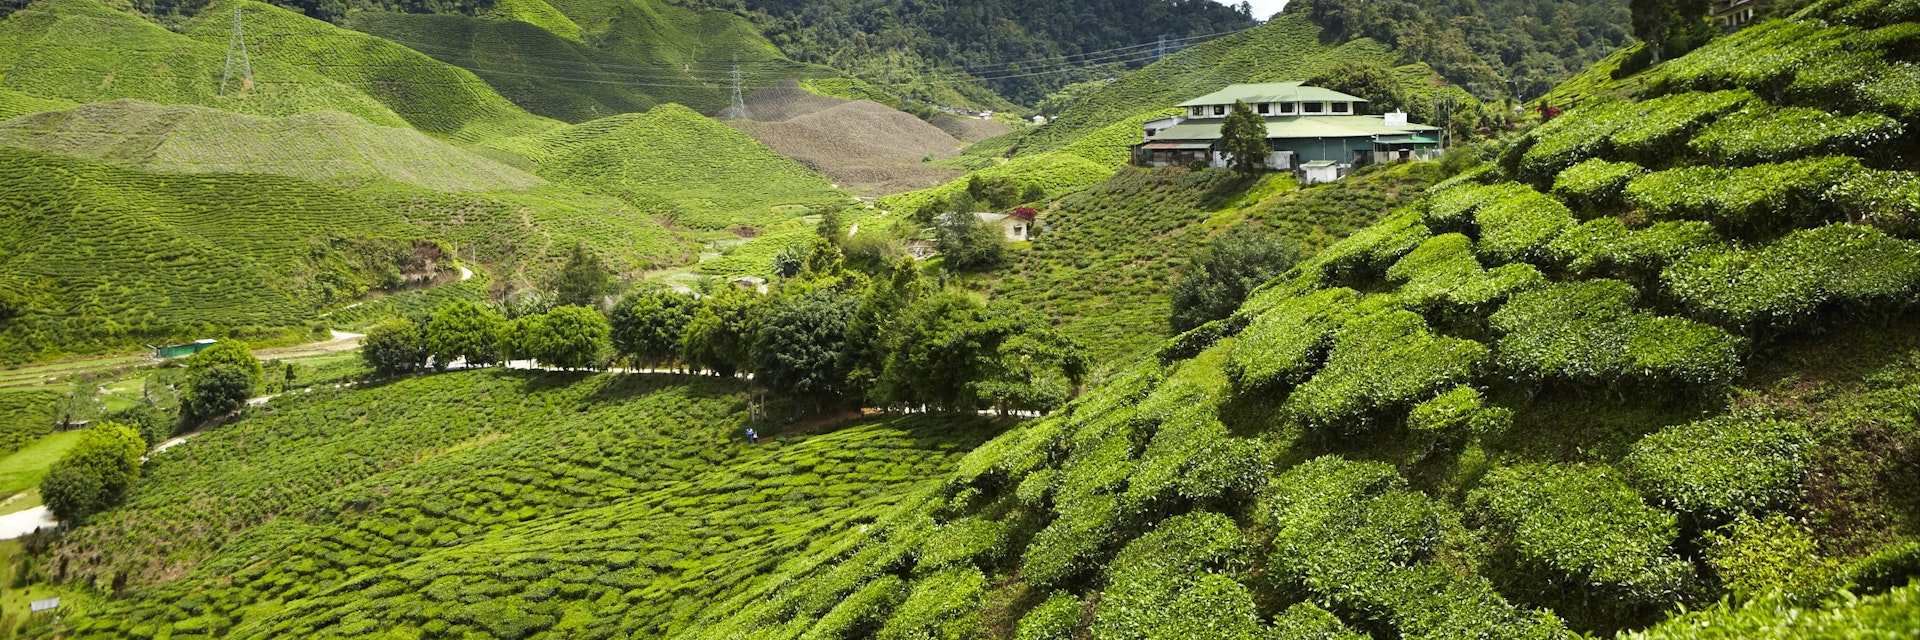 Overview of tea plantation.